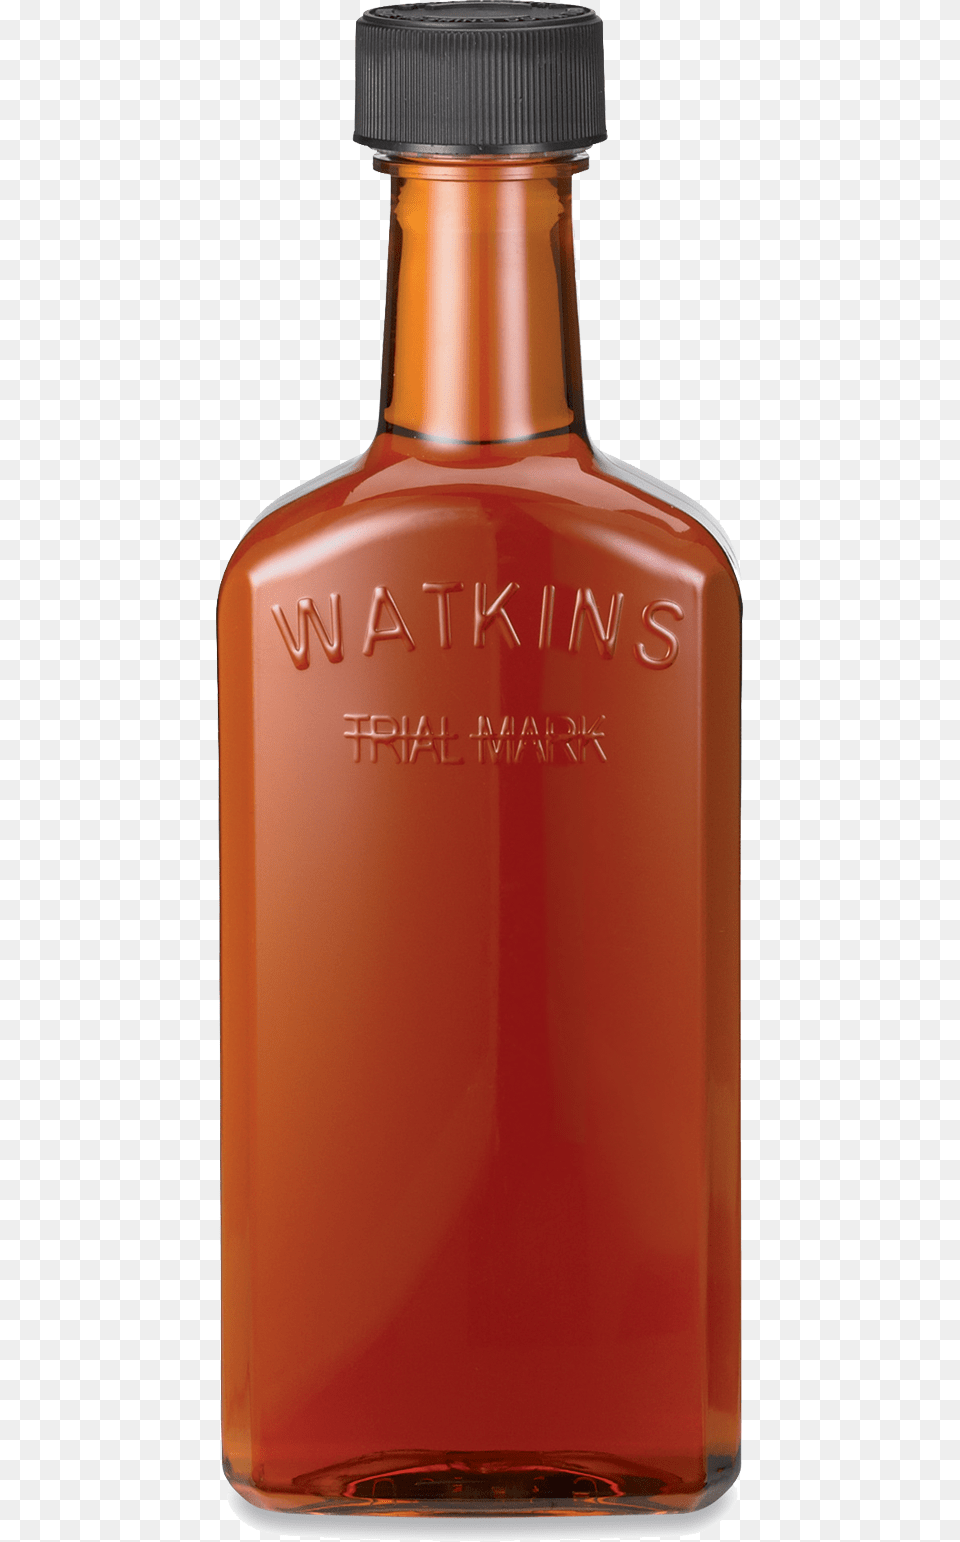 Flourish Watkins Throw Back Bottle Old Medicine Bottle, Cosmetics, Perfume, Alcohol, Beverage Free Transparent Png